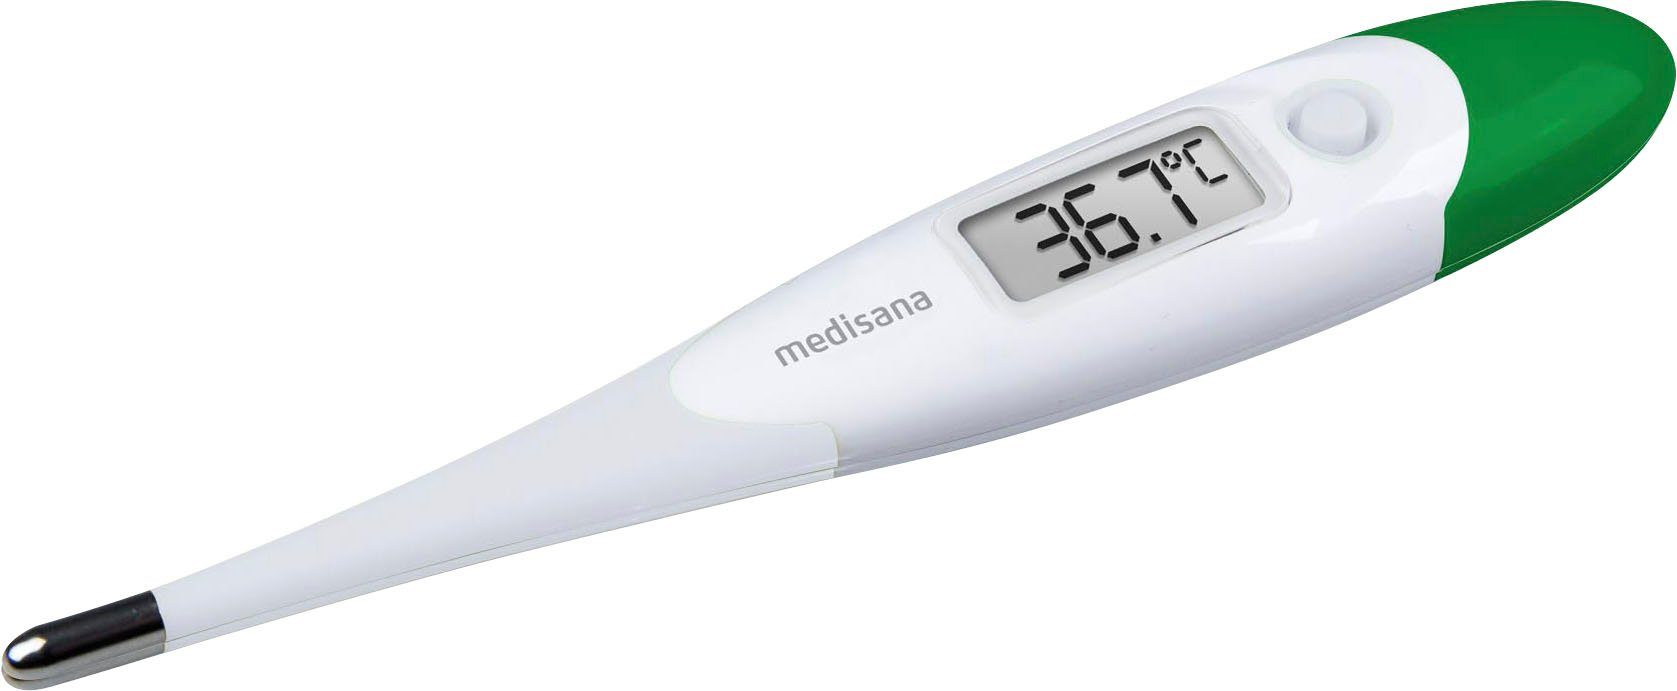 TM700 Medisana Fieberthermometer